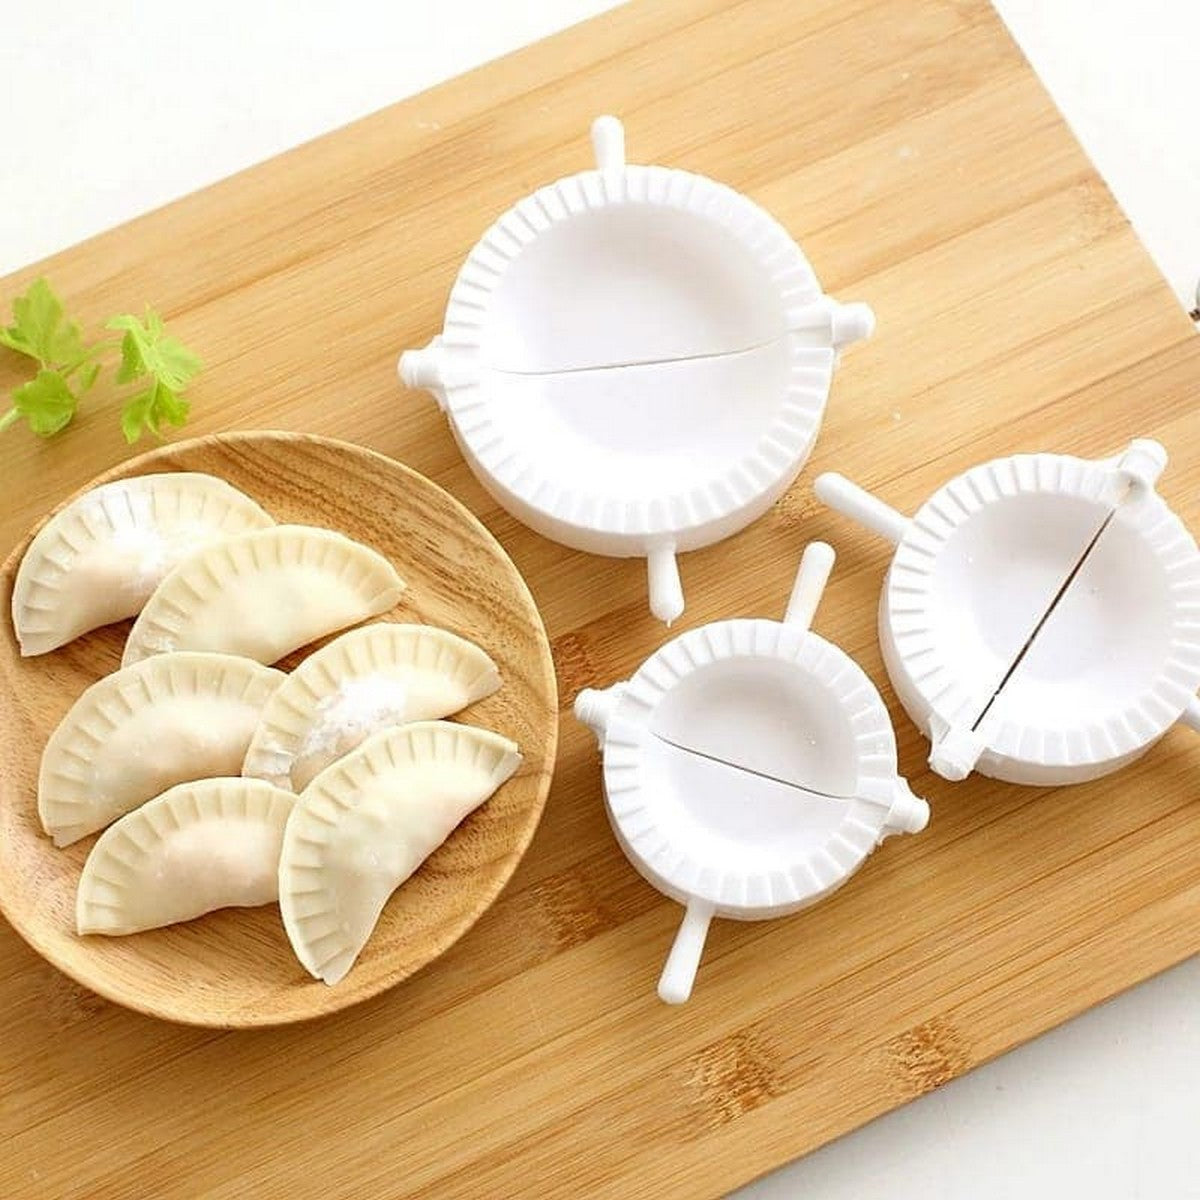 Pack of 3 Different sizes samosa maker samosa shaper- Dumpling Press Mold